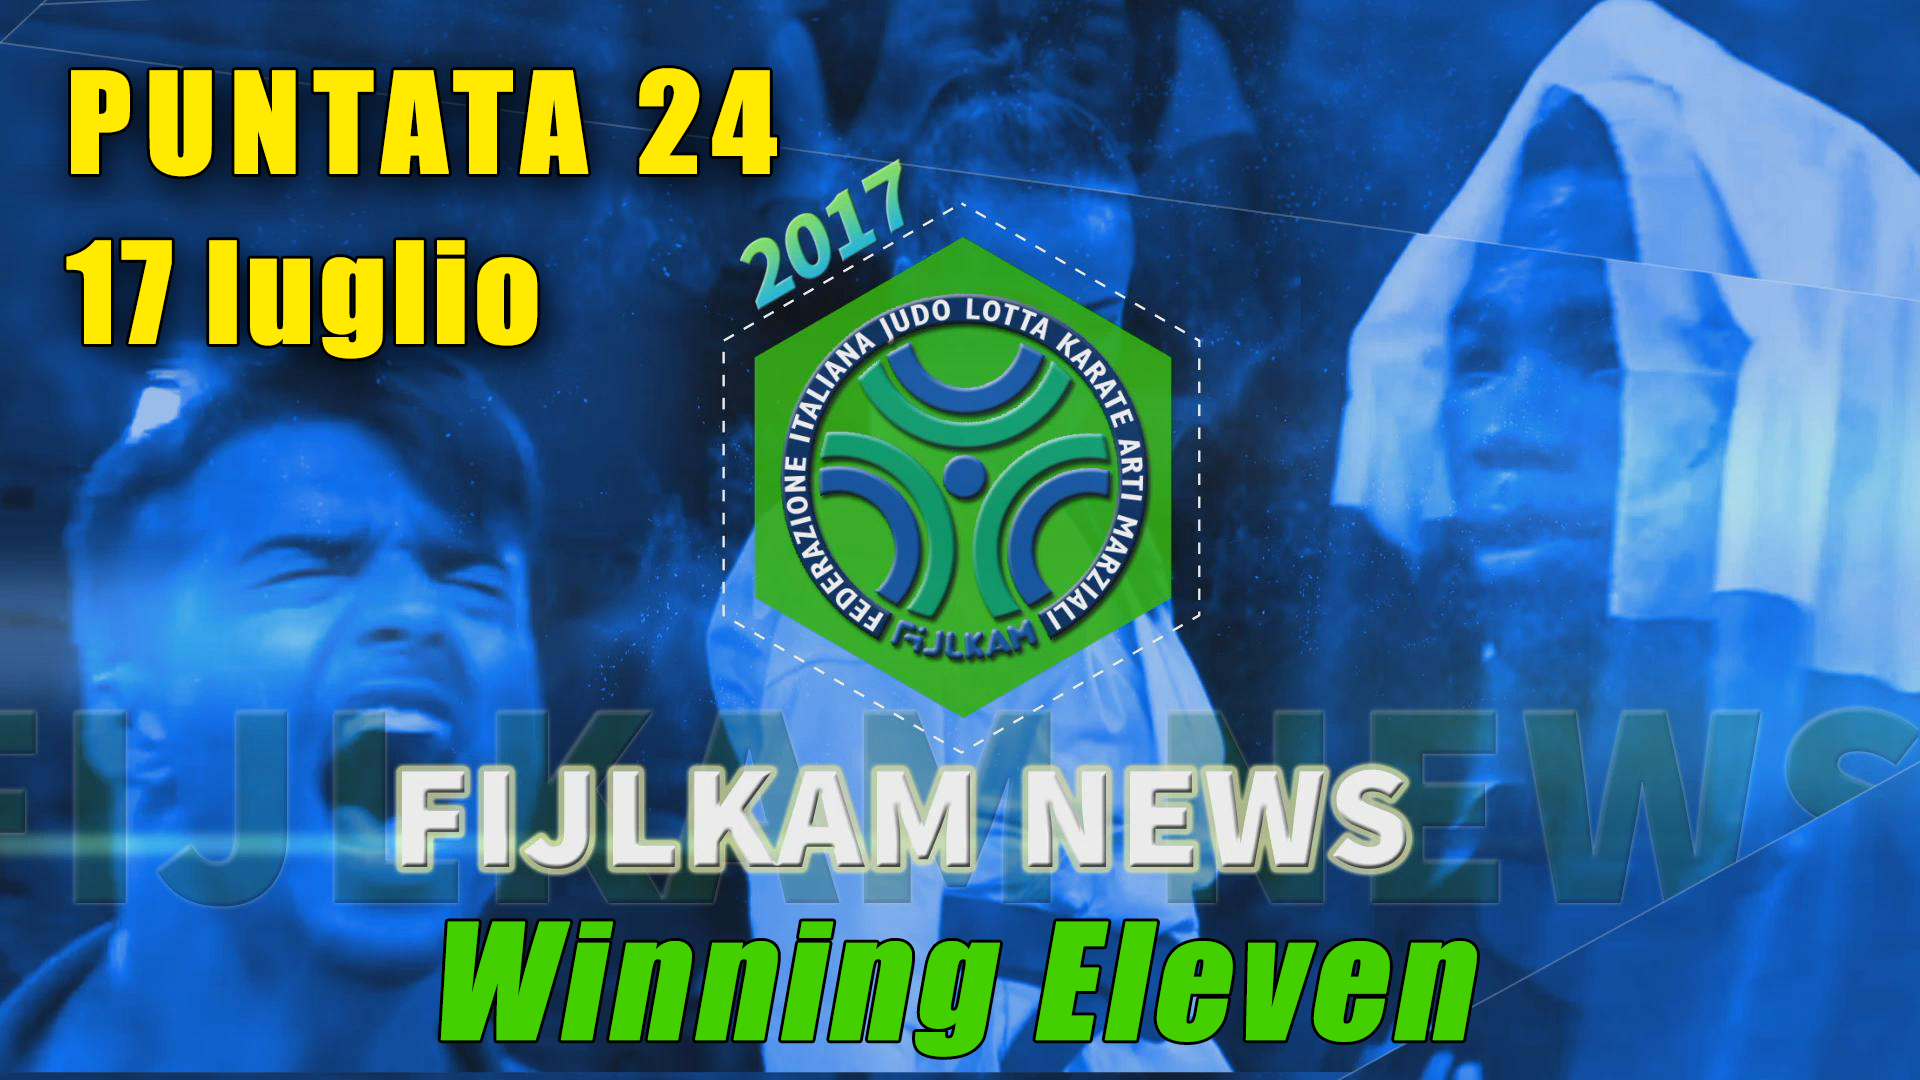 FIJLKAM NEWS 24 - Winning Eleven